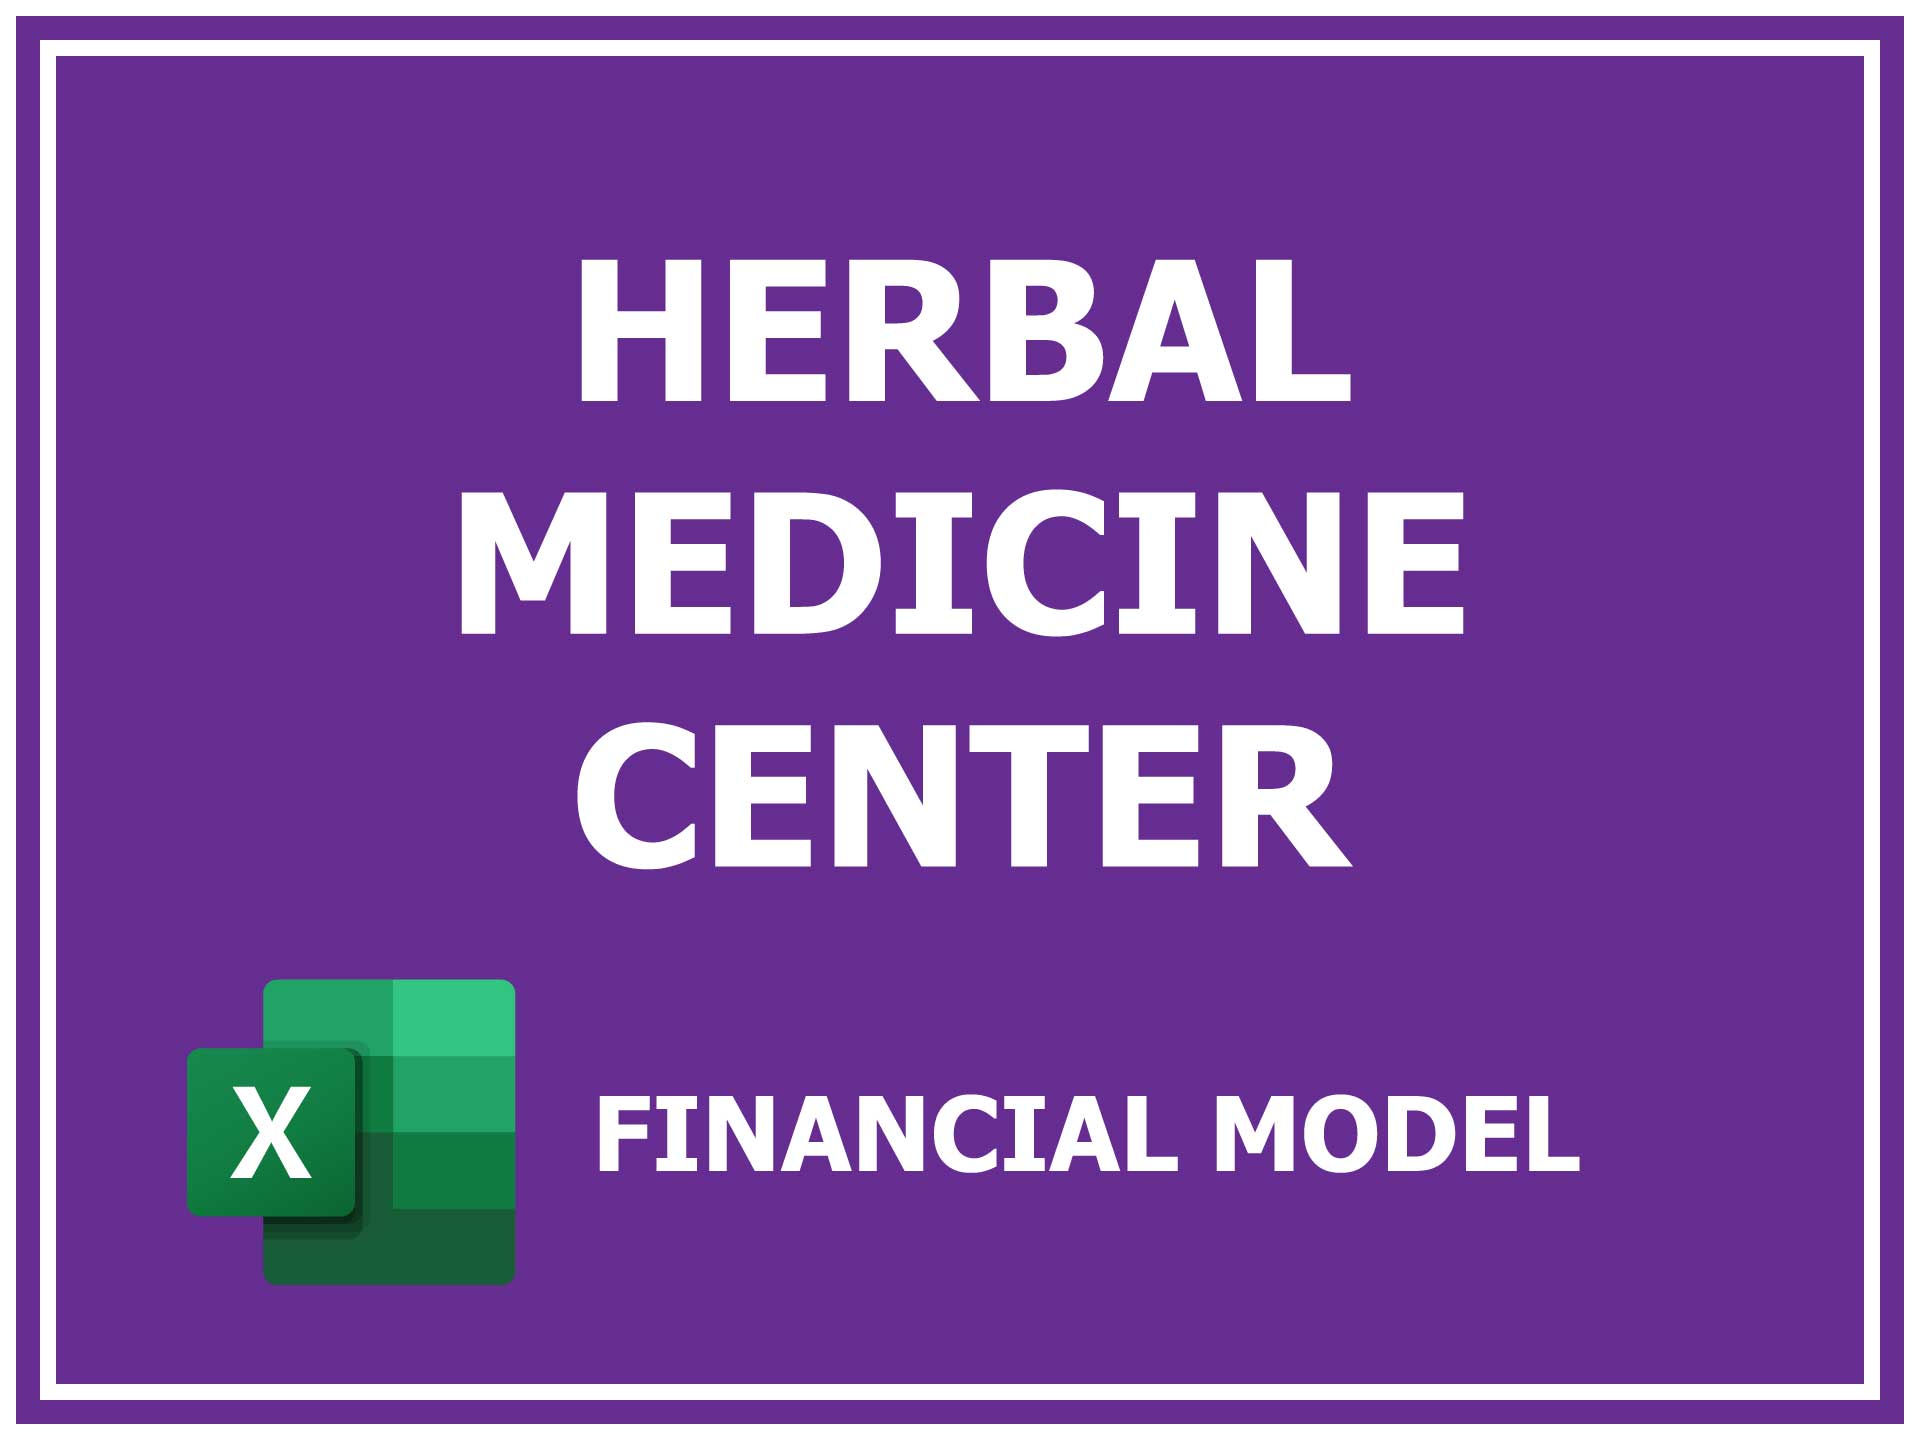 Herbal Medicine Center